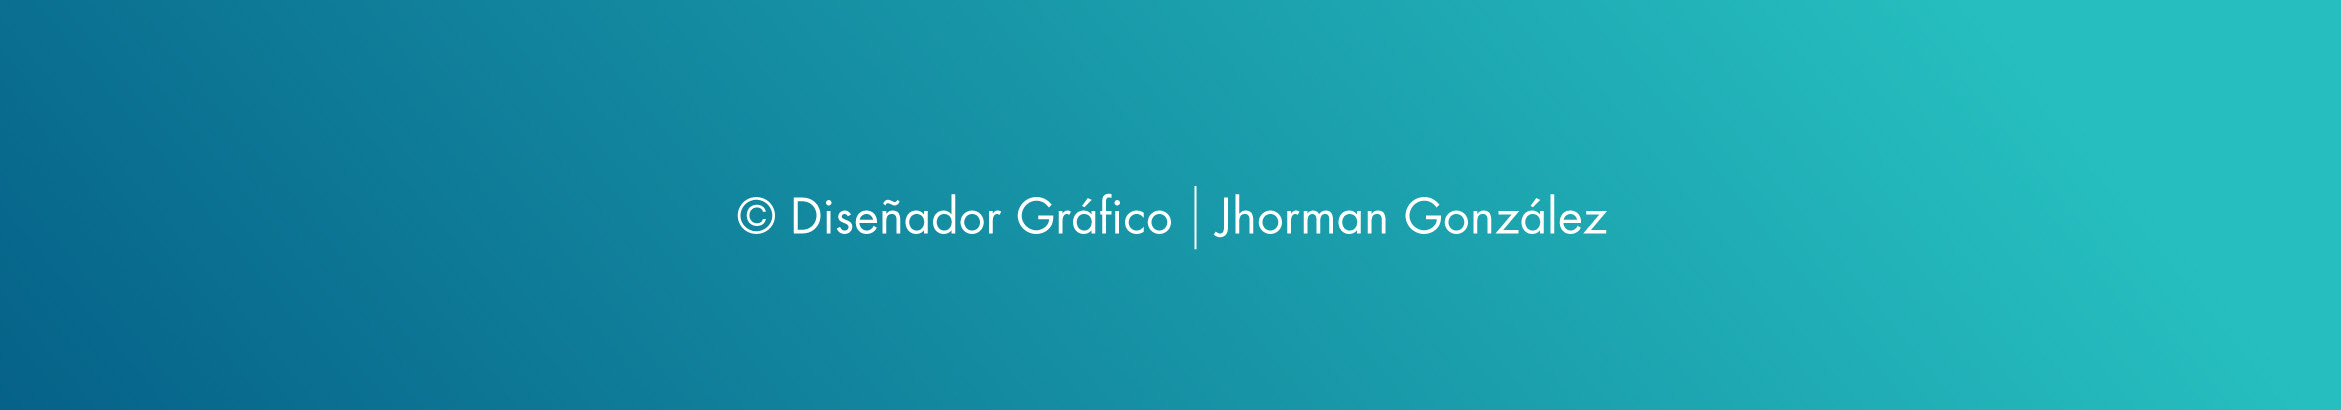 Jhorman Gonzalez's profile banner